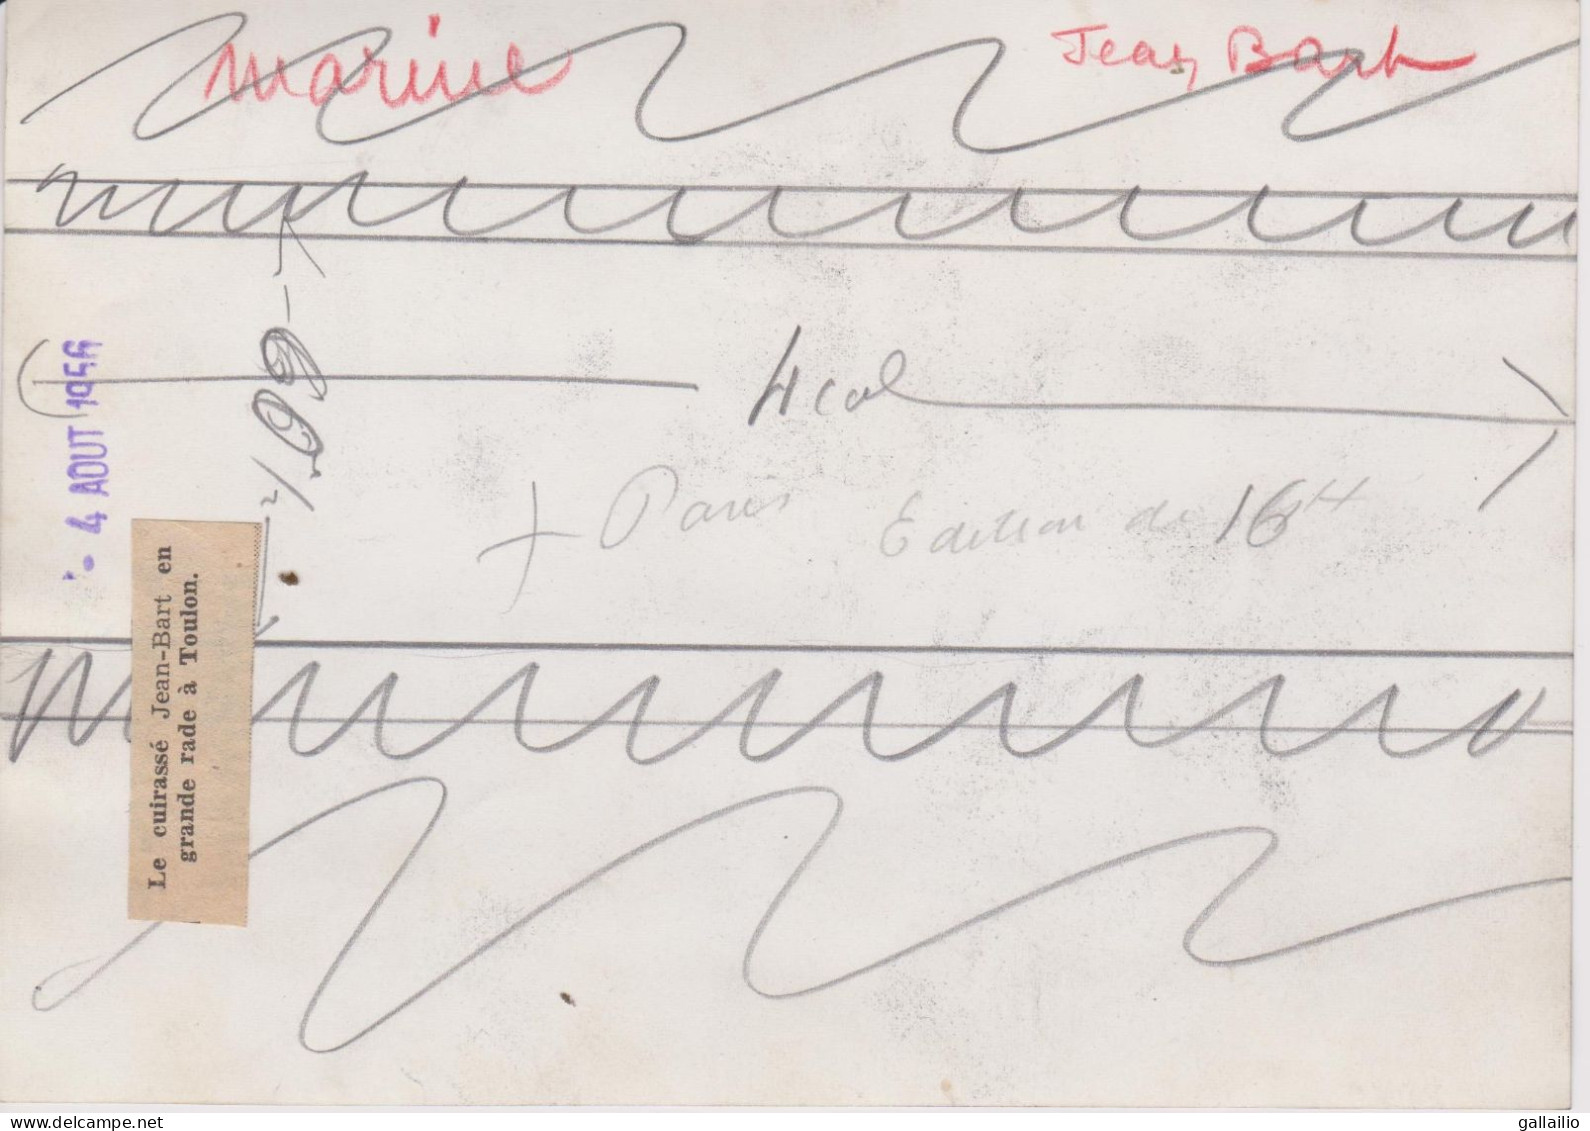 PHOTO PRESSE LE CUIRASSE JEAN BART EN RADE A TOULON AOUT 1956 FORMAT 18 X 13 CMS - Boten